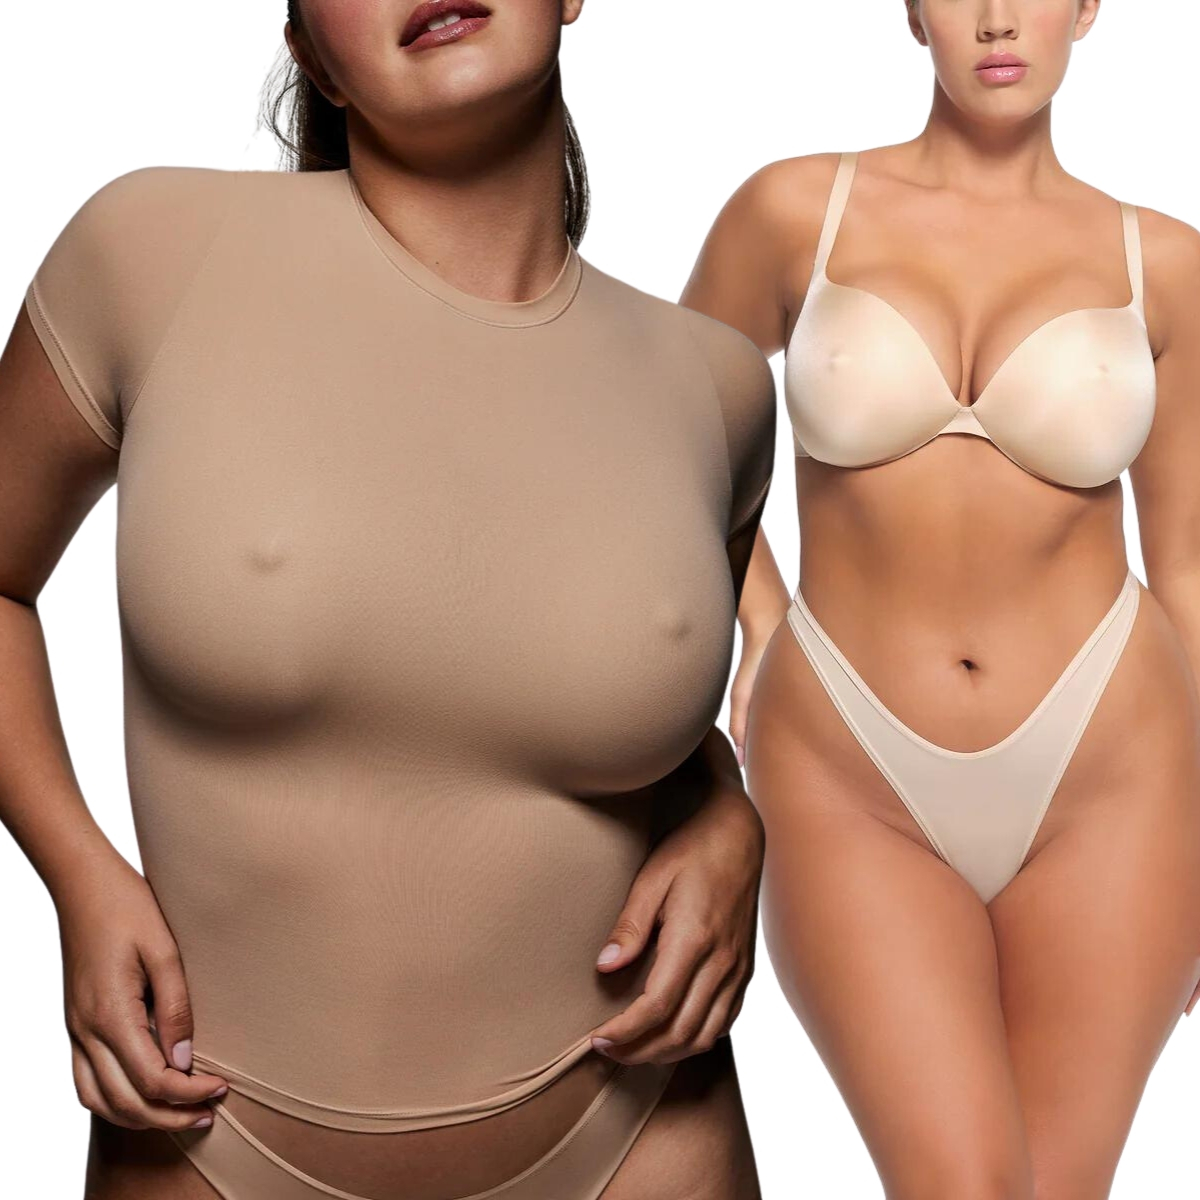 Kim Kardashian's new bra with built in nippl3s. #skims #kimkardashian